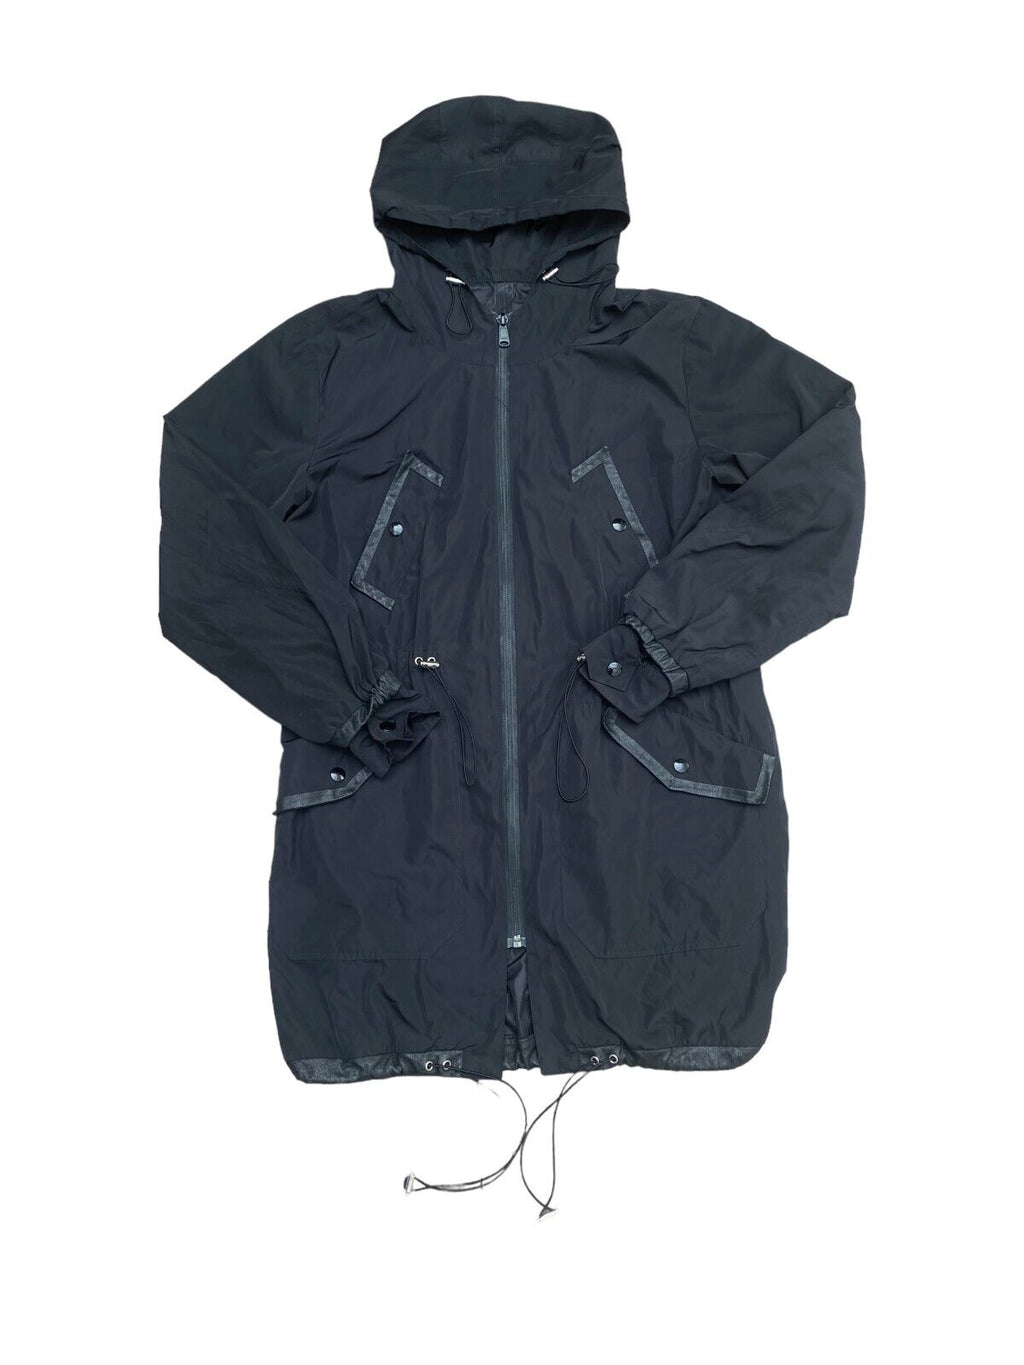 Black Parka / Raincoat Jacket